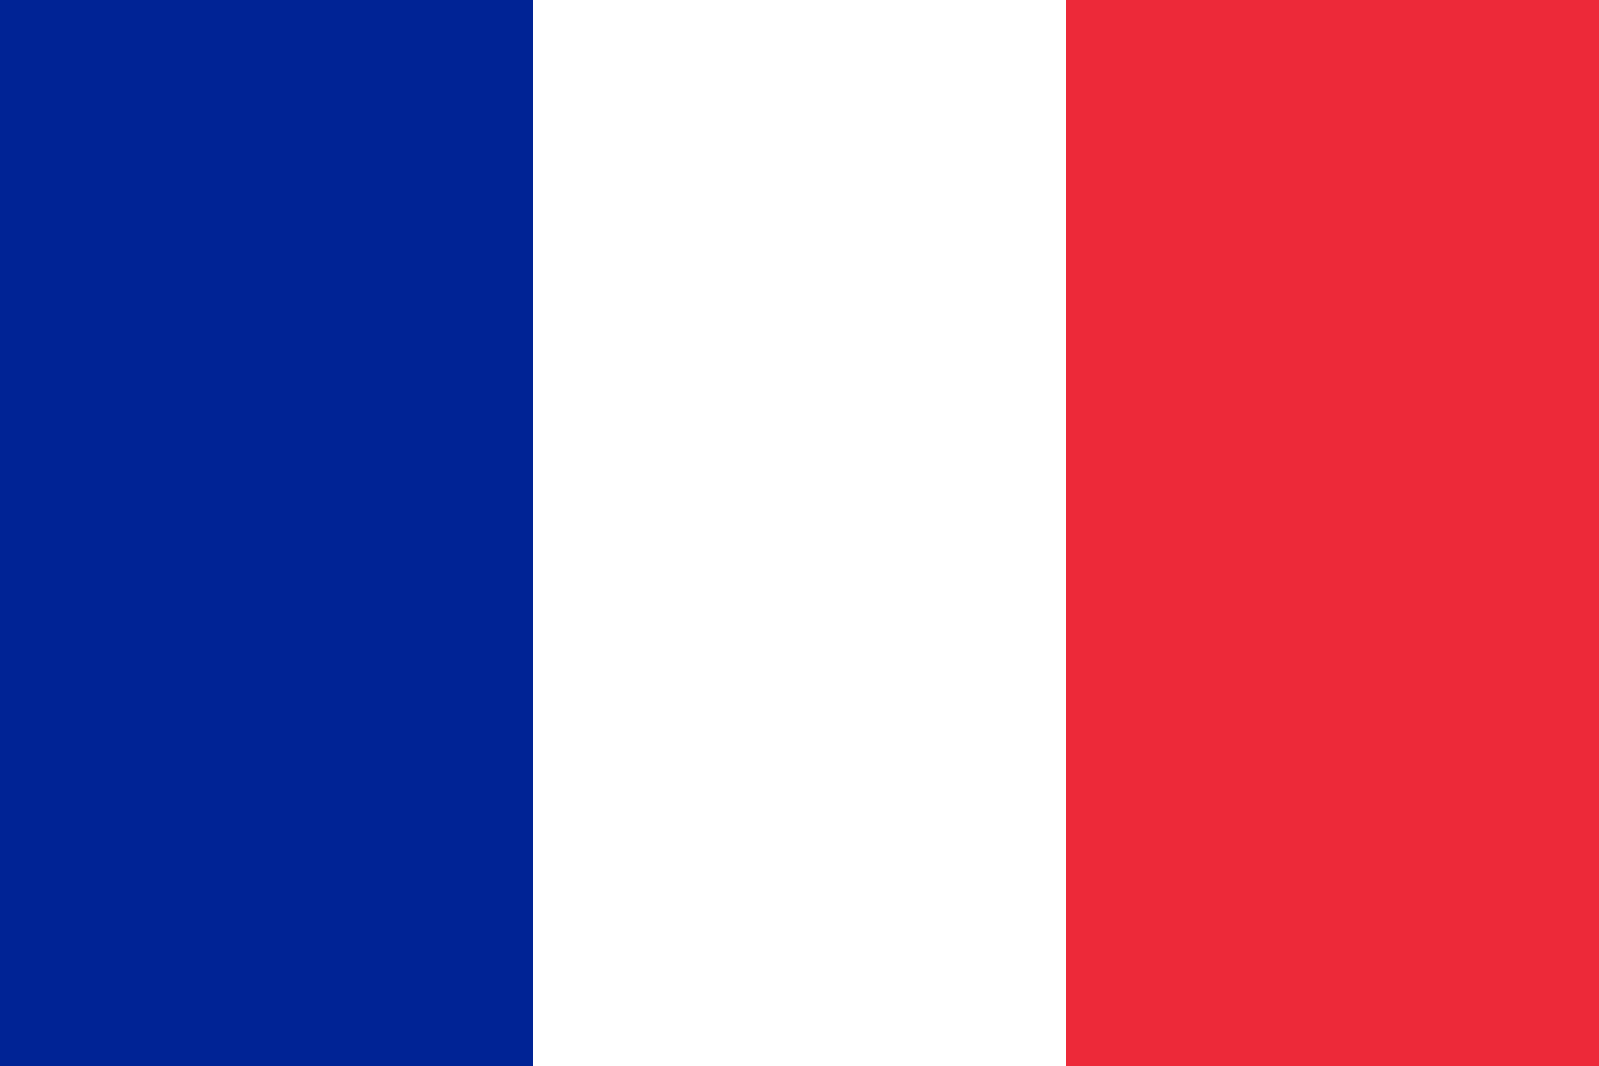 France: Restructuring SAED